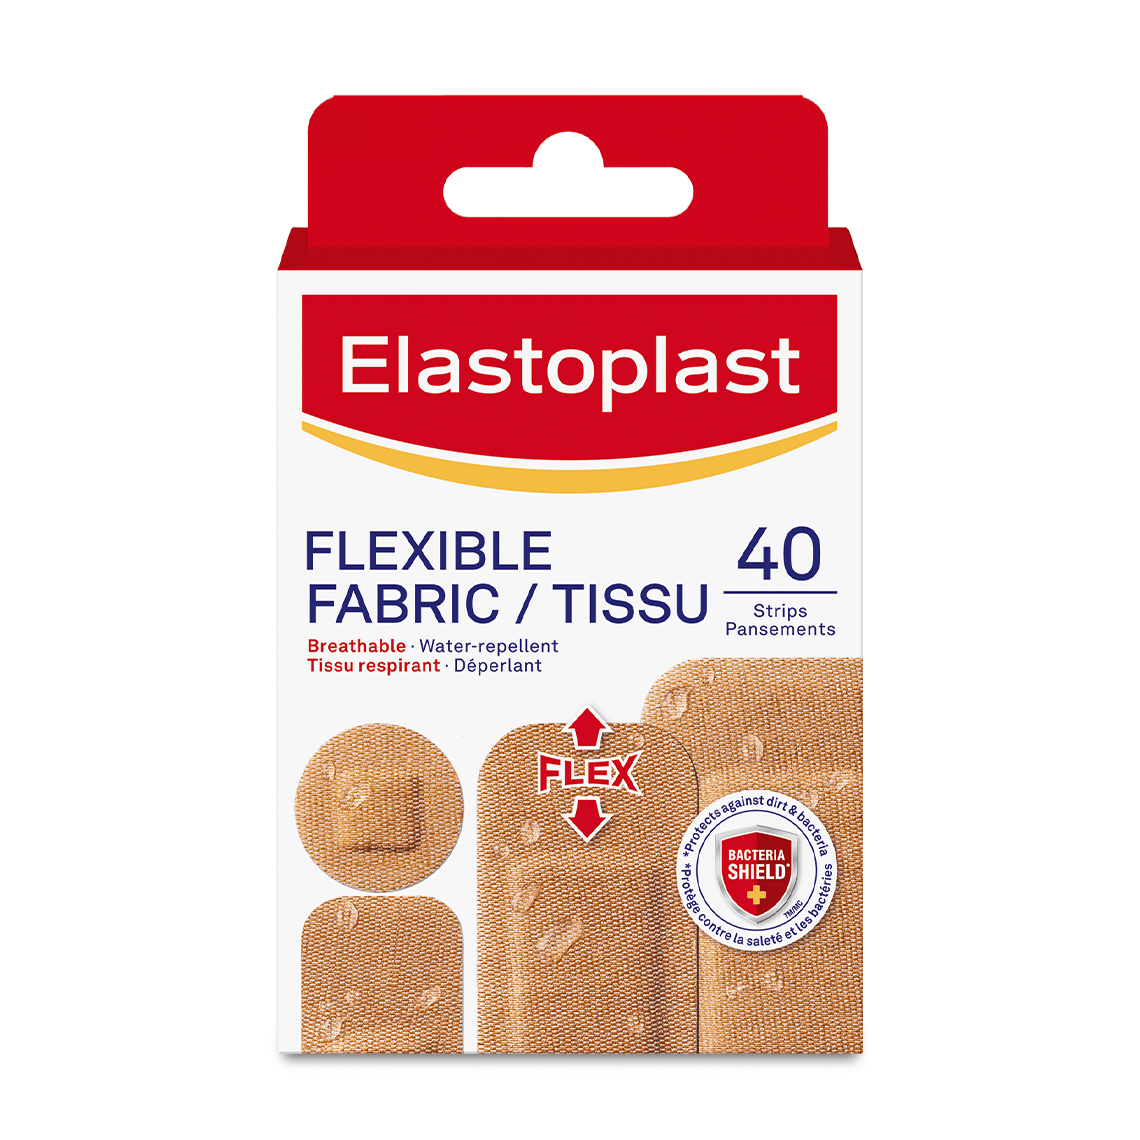 Elastoplast Assorted Flexible Fabric Bandages - Variety Pack